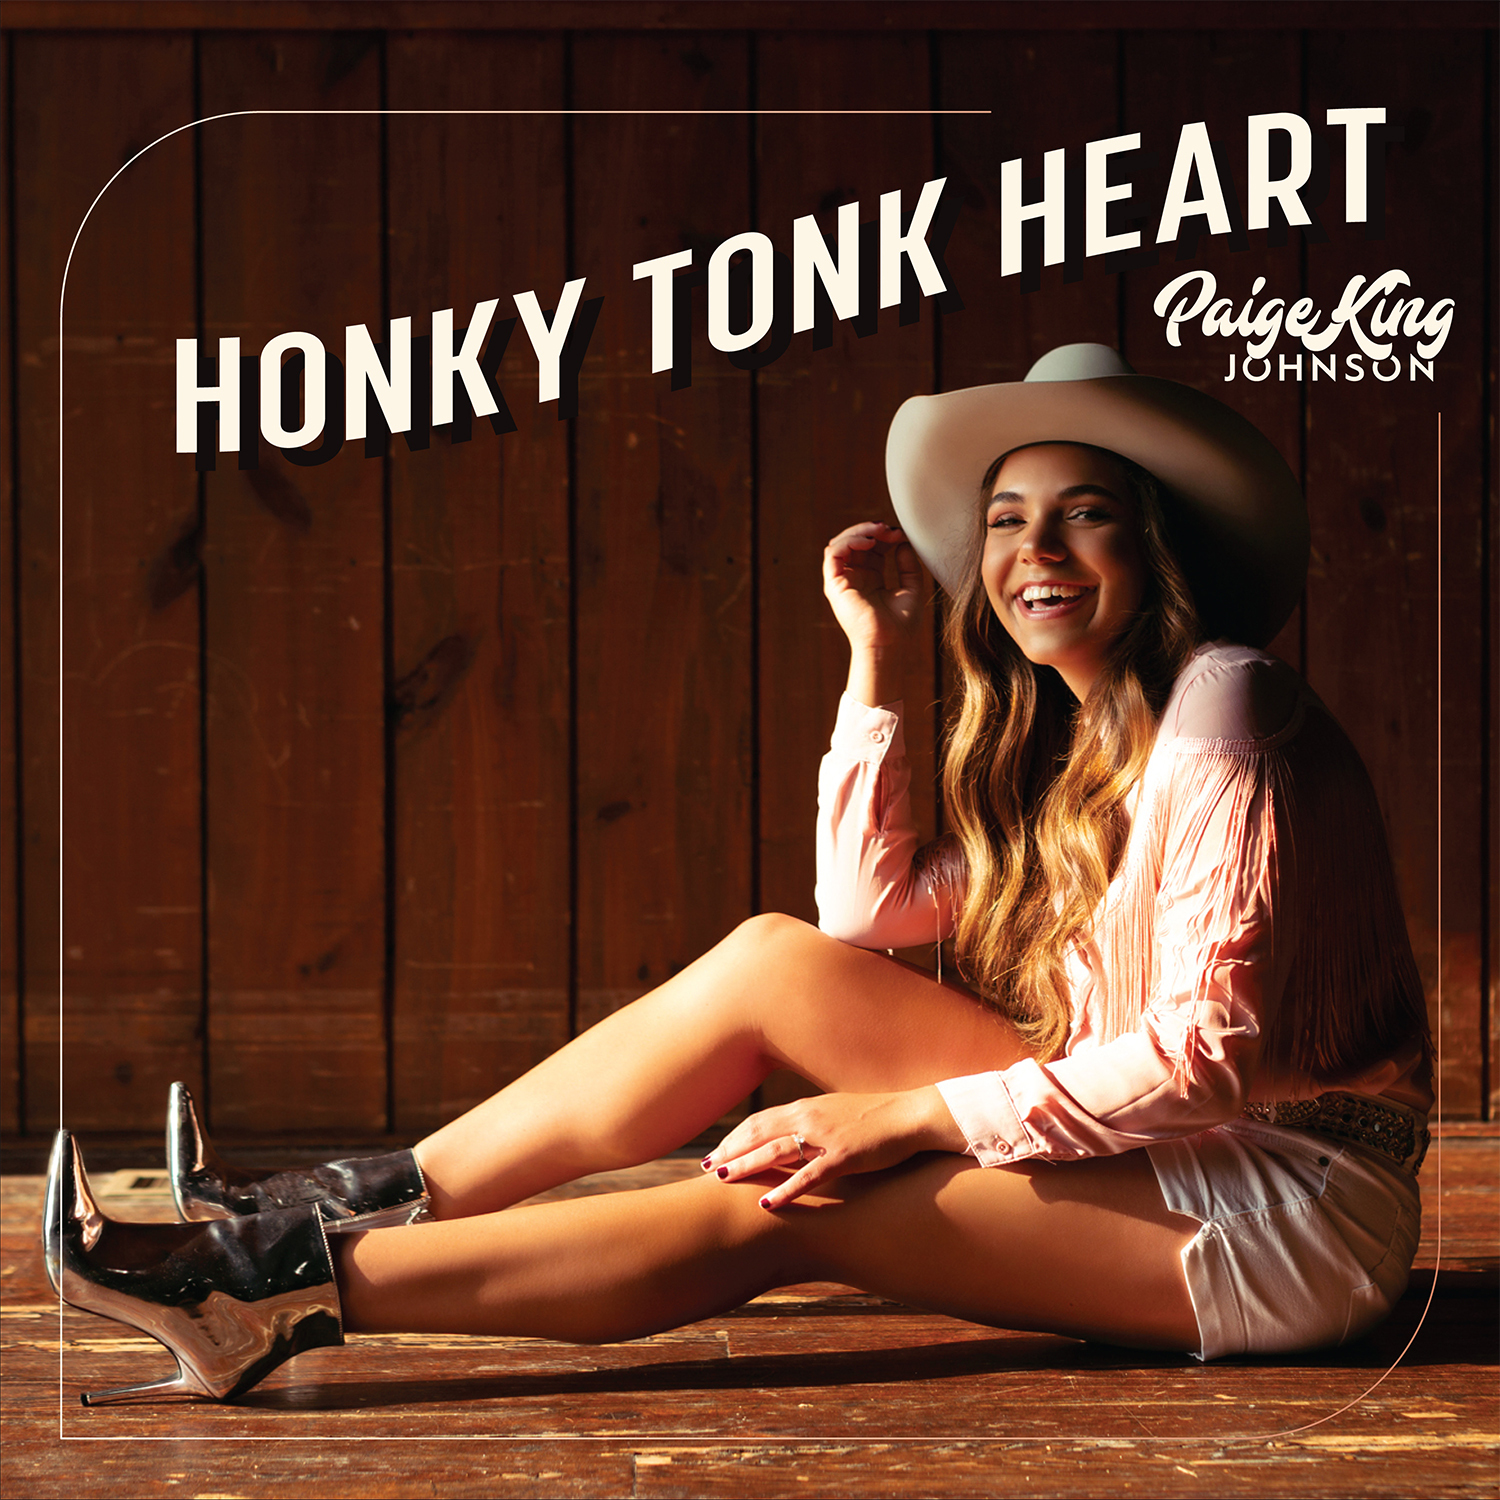 Paige-King-Johnson-Honky-Tonk-Heart.jpg